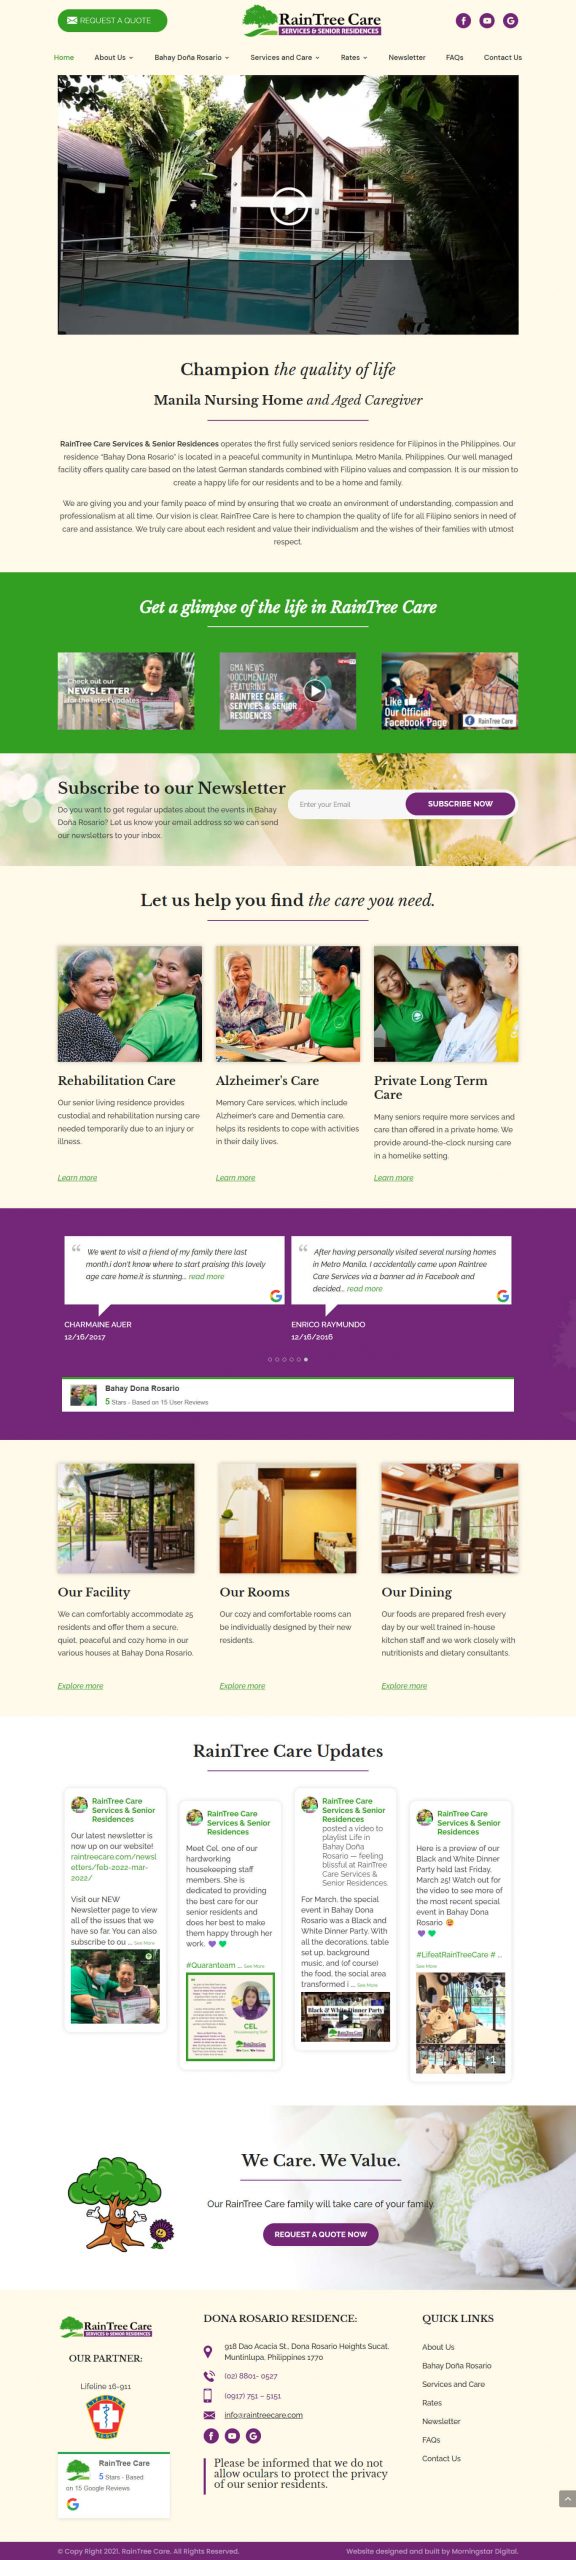 Raintreecare_Homepage